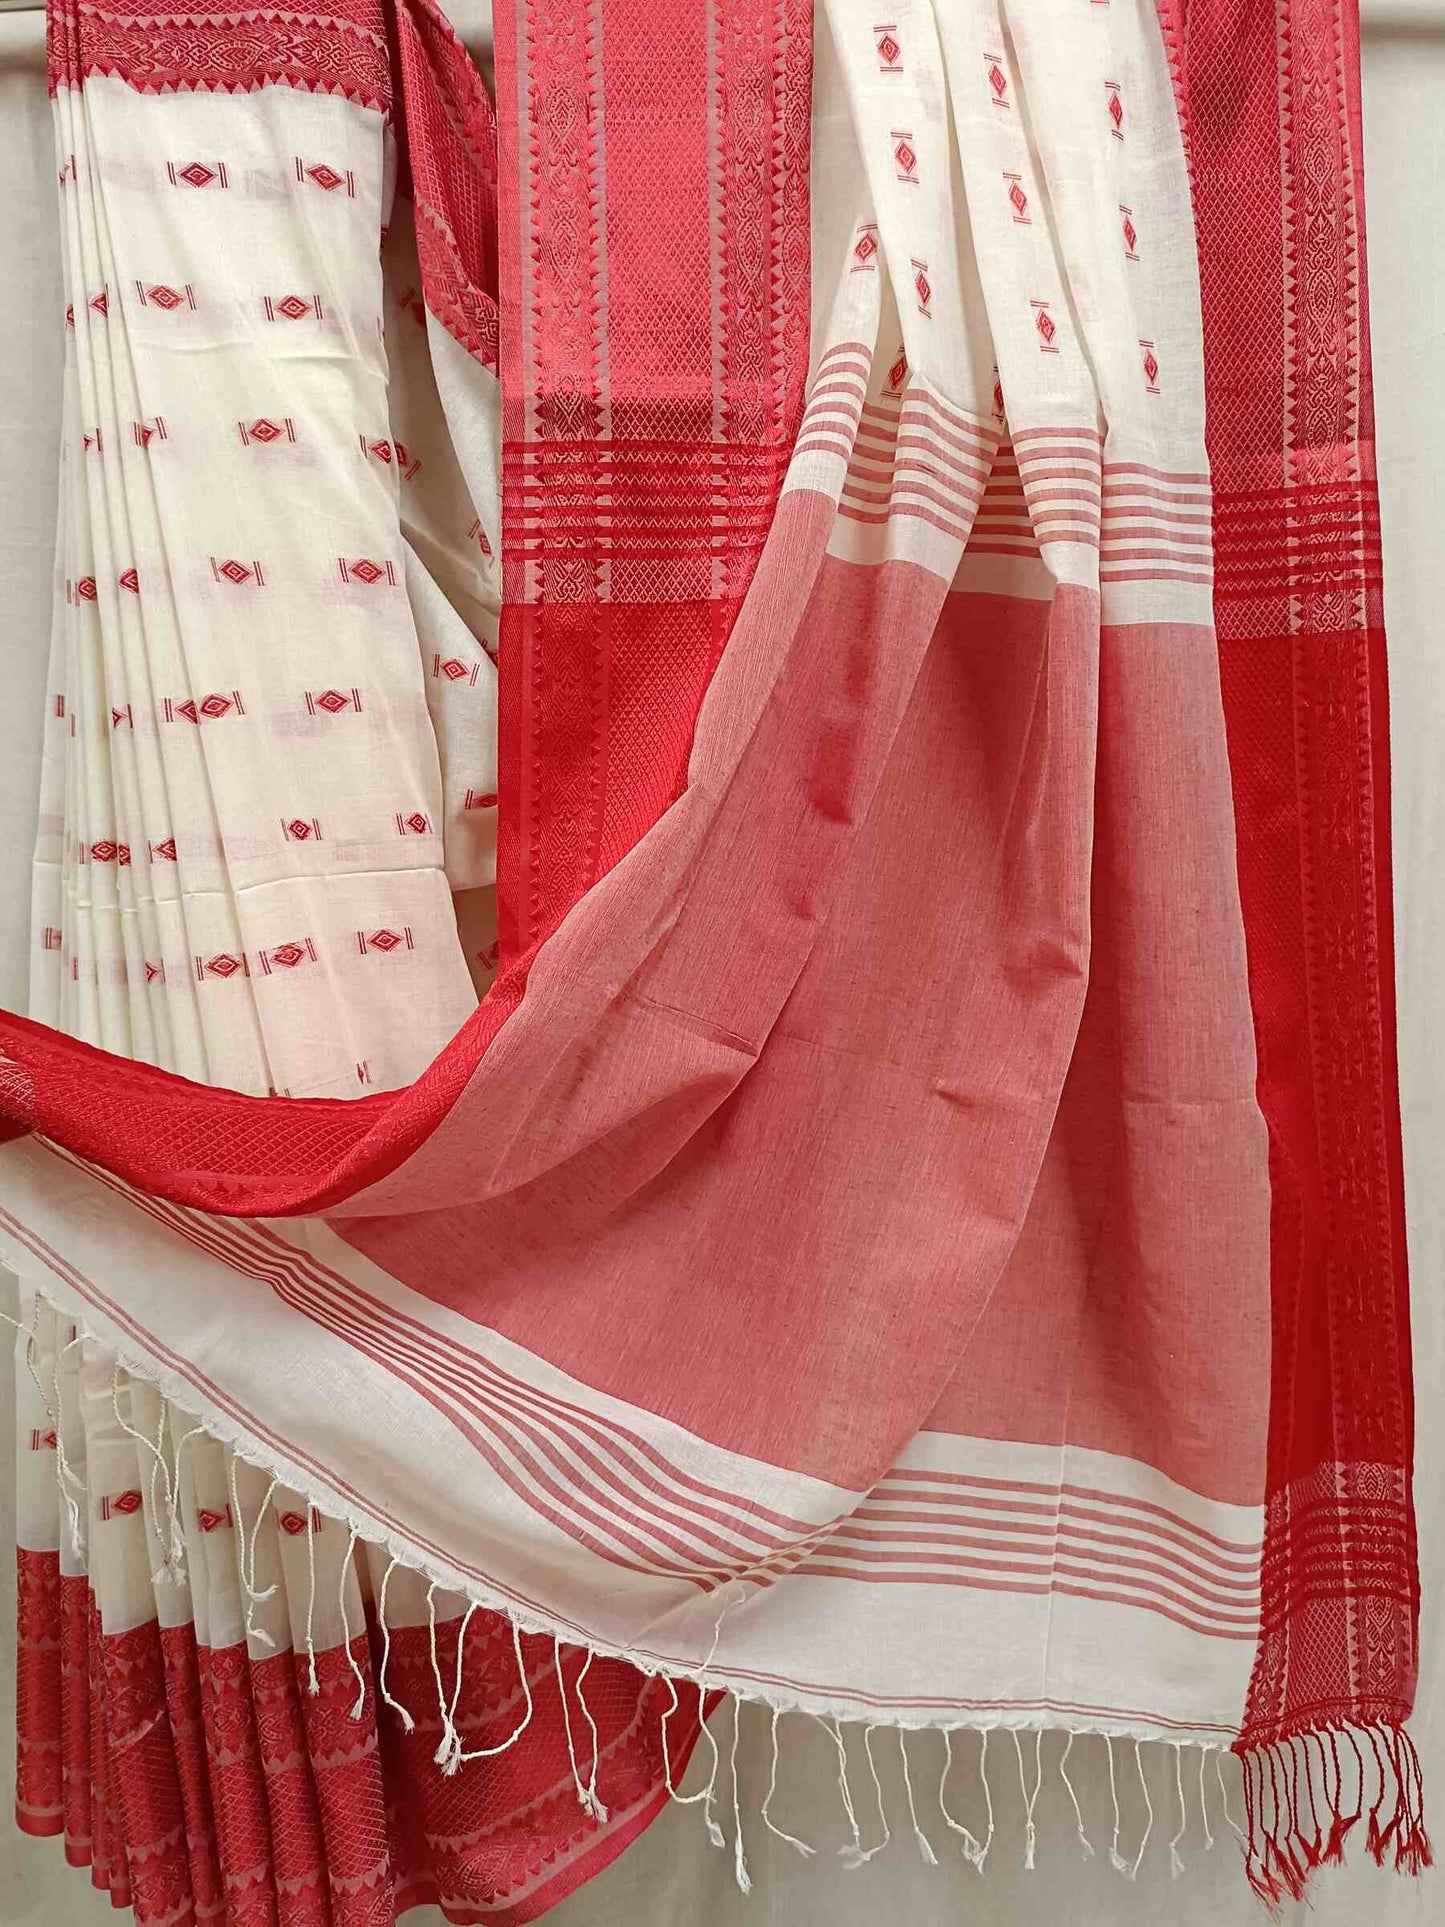 White & Red Fine Quality Handloom Cotton Saree